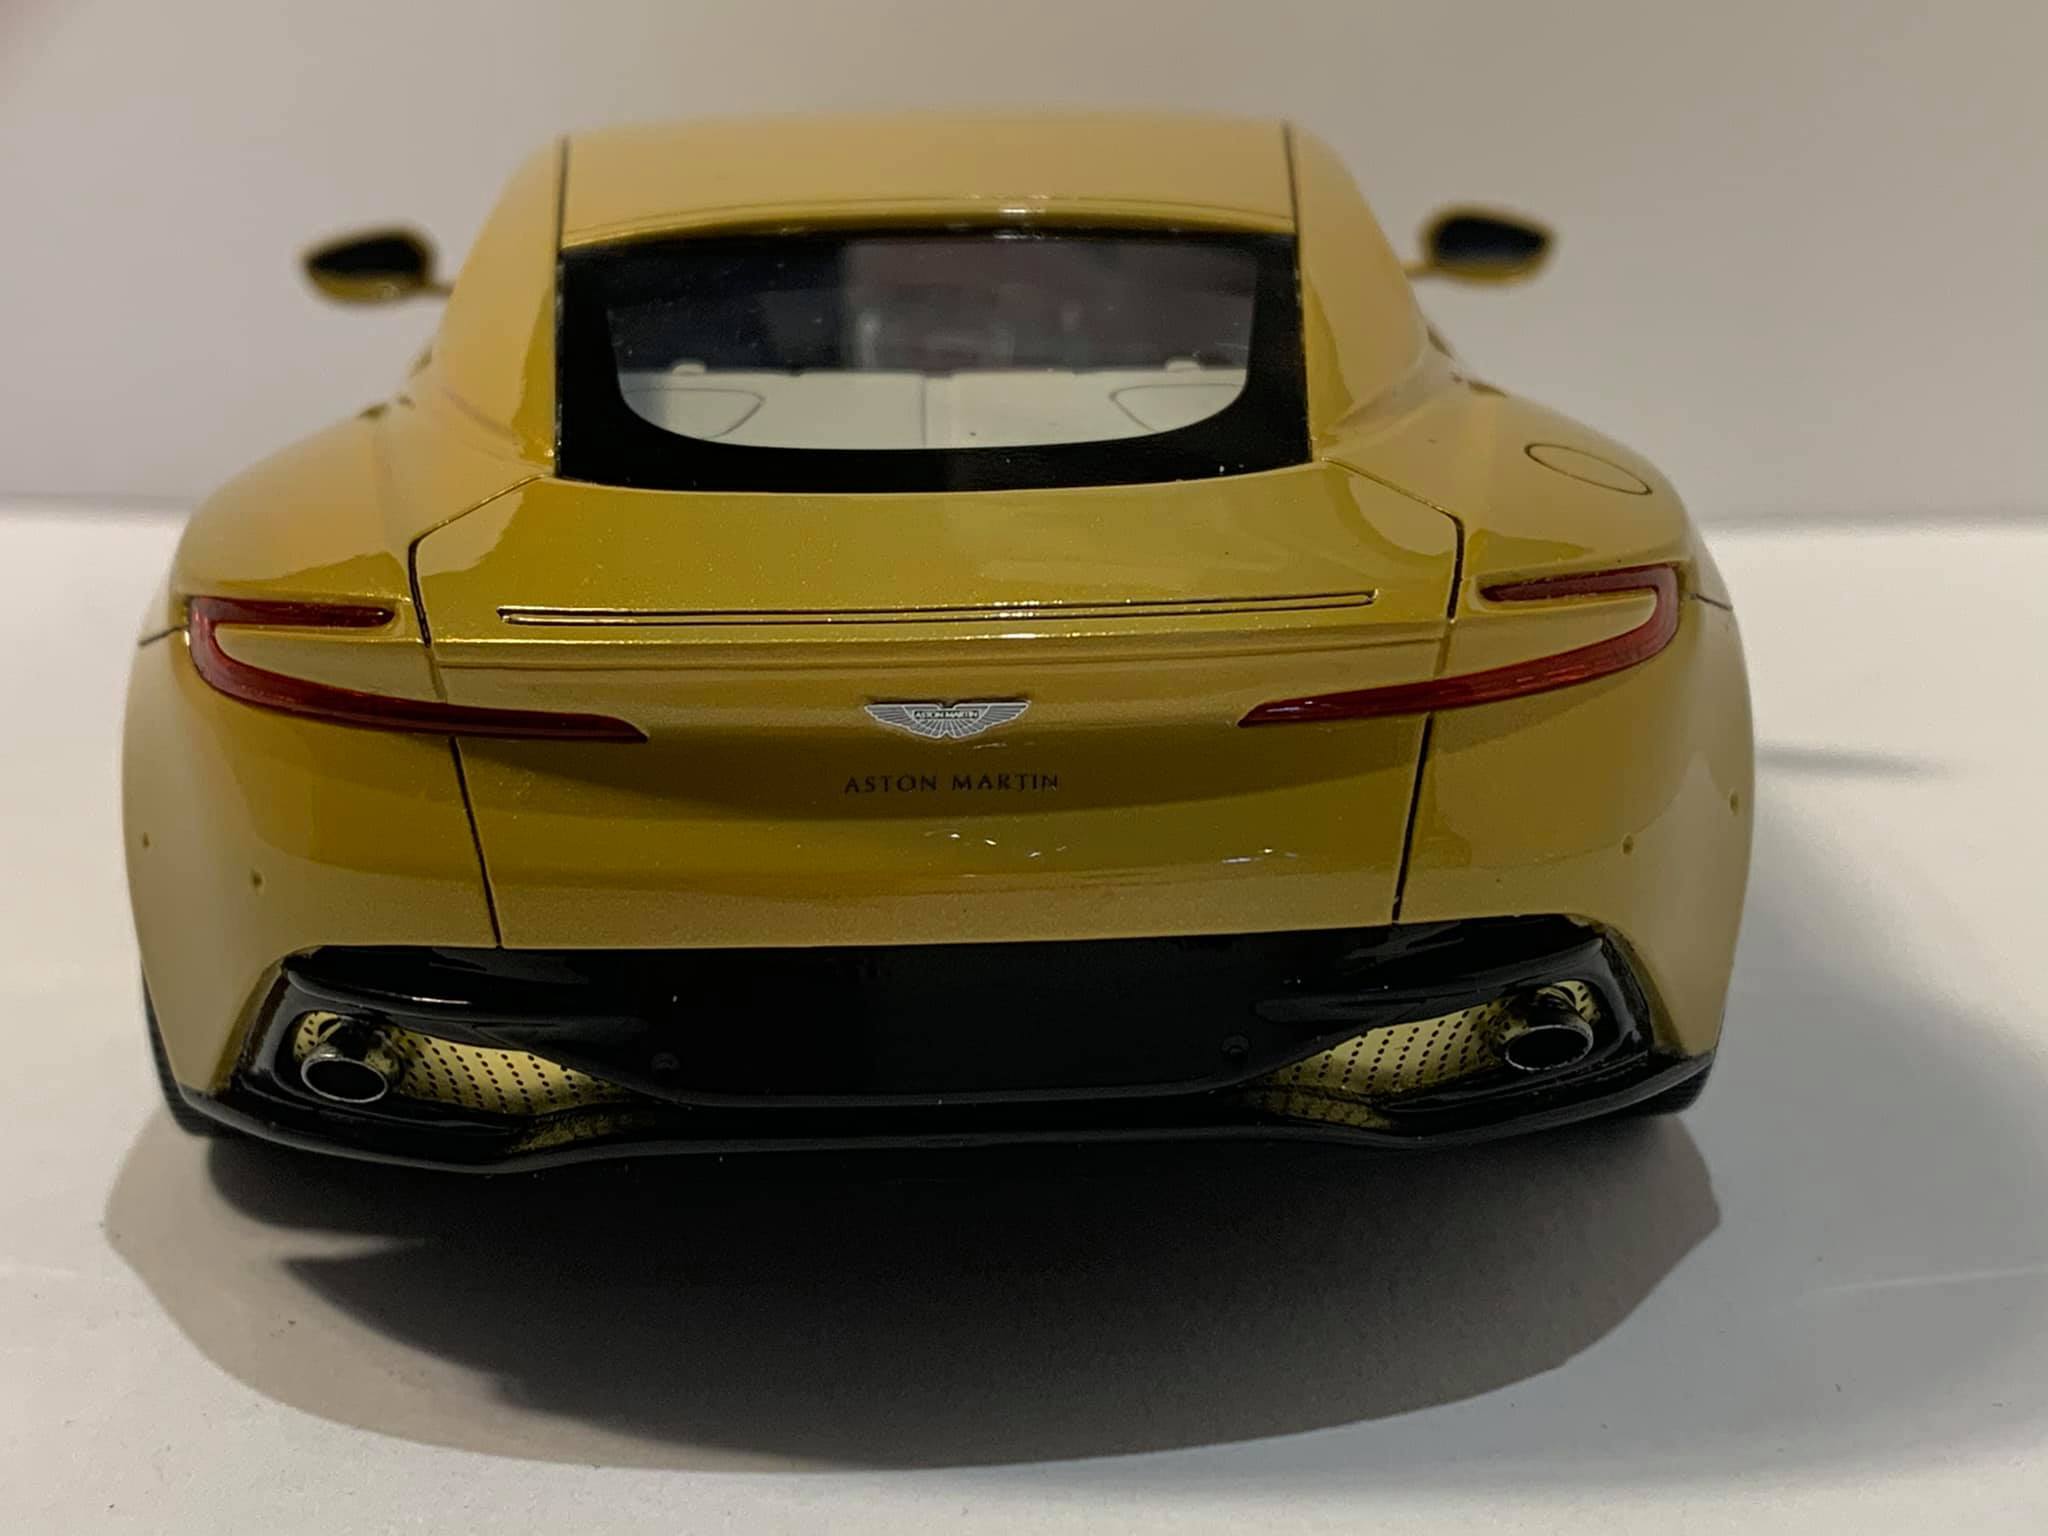 First Look: TrueScale Miniatures Aston Martin DB11